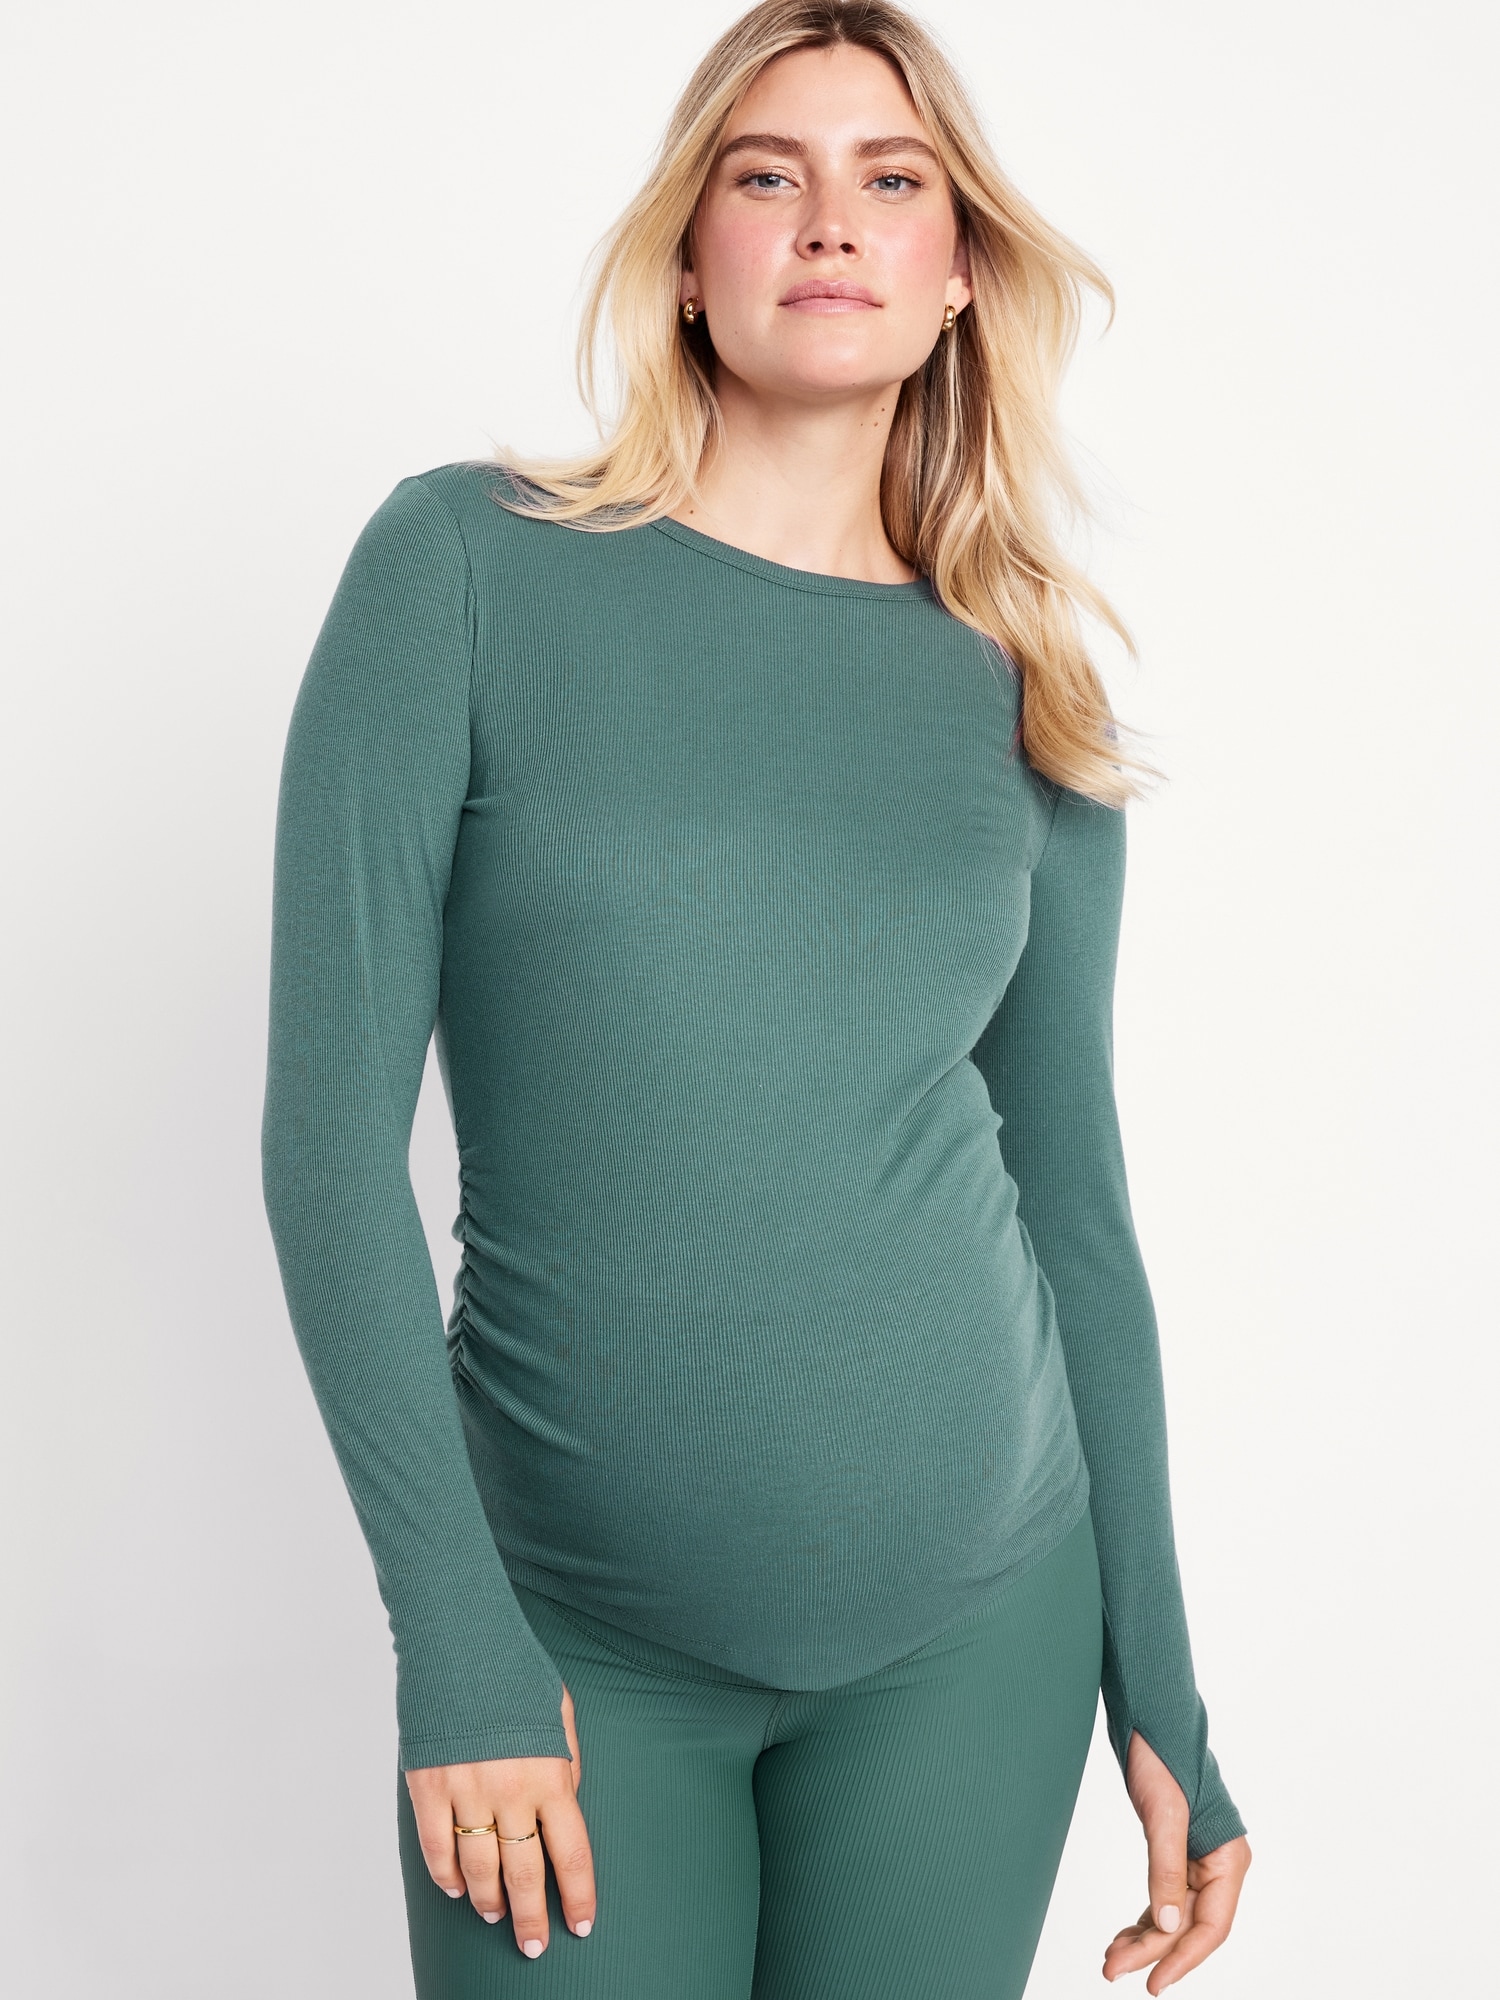 Maternity UltraLite Long-Sleeve T-Shirt | Old Navy